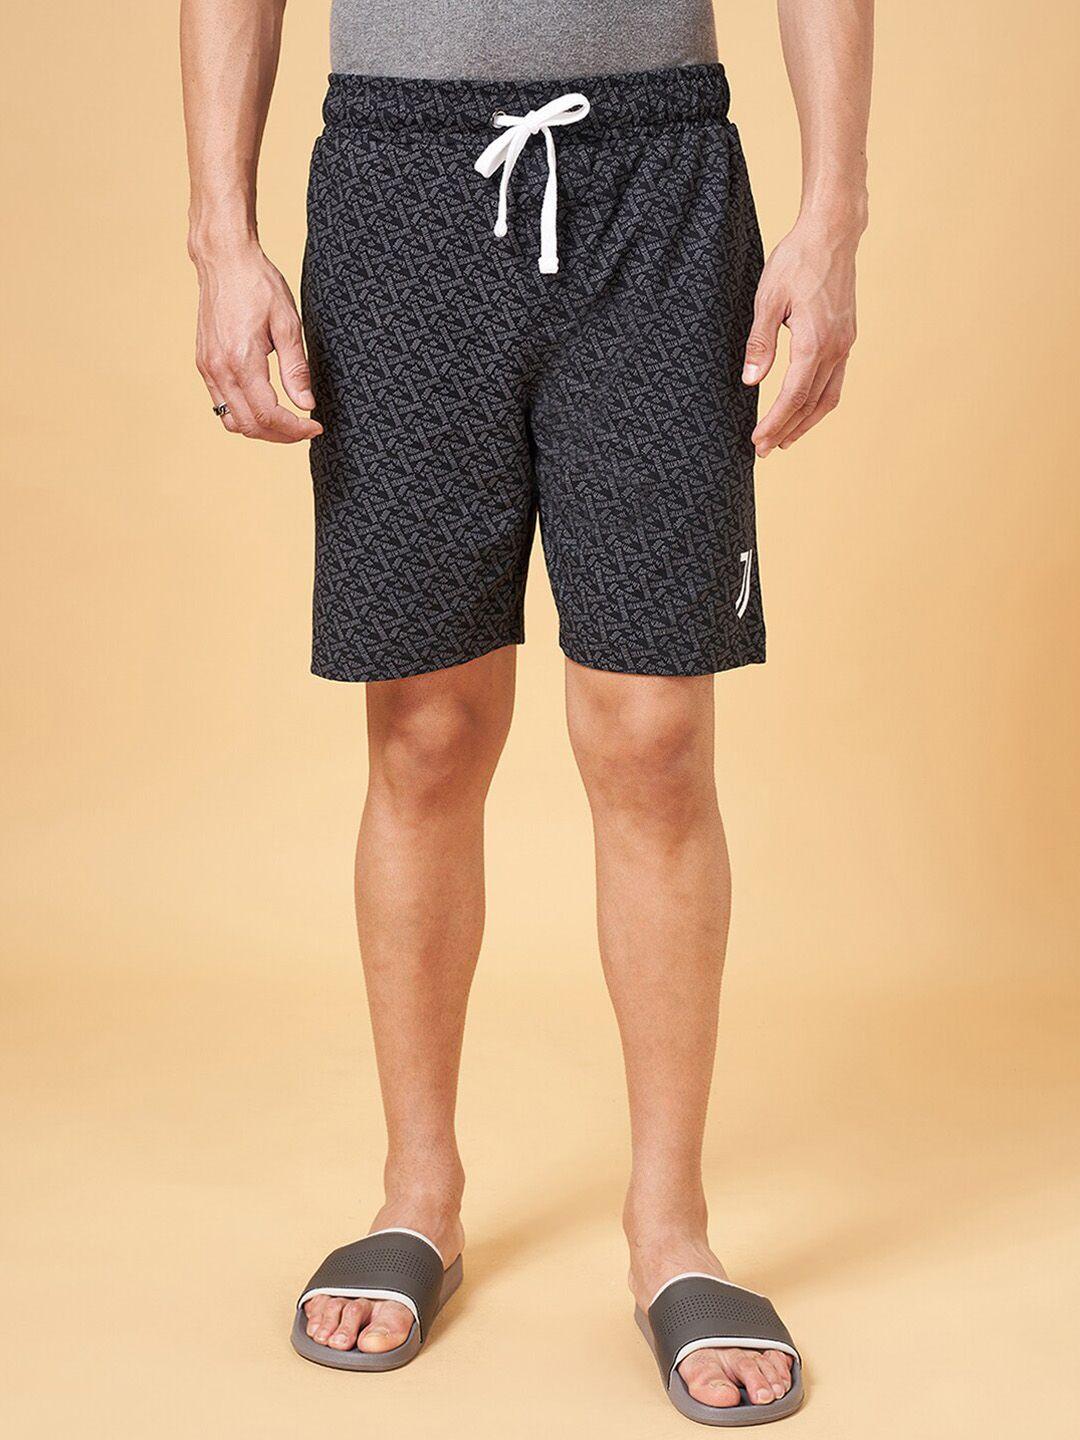 SF JEANS by Pantaloons Men Abstract Printed Slim Fit Cotton Regular Shorts